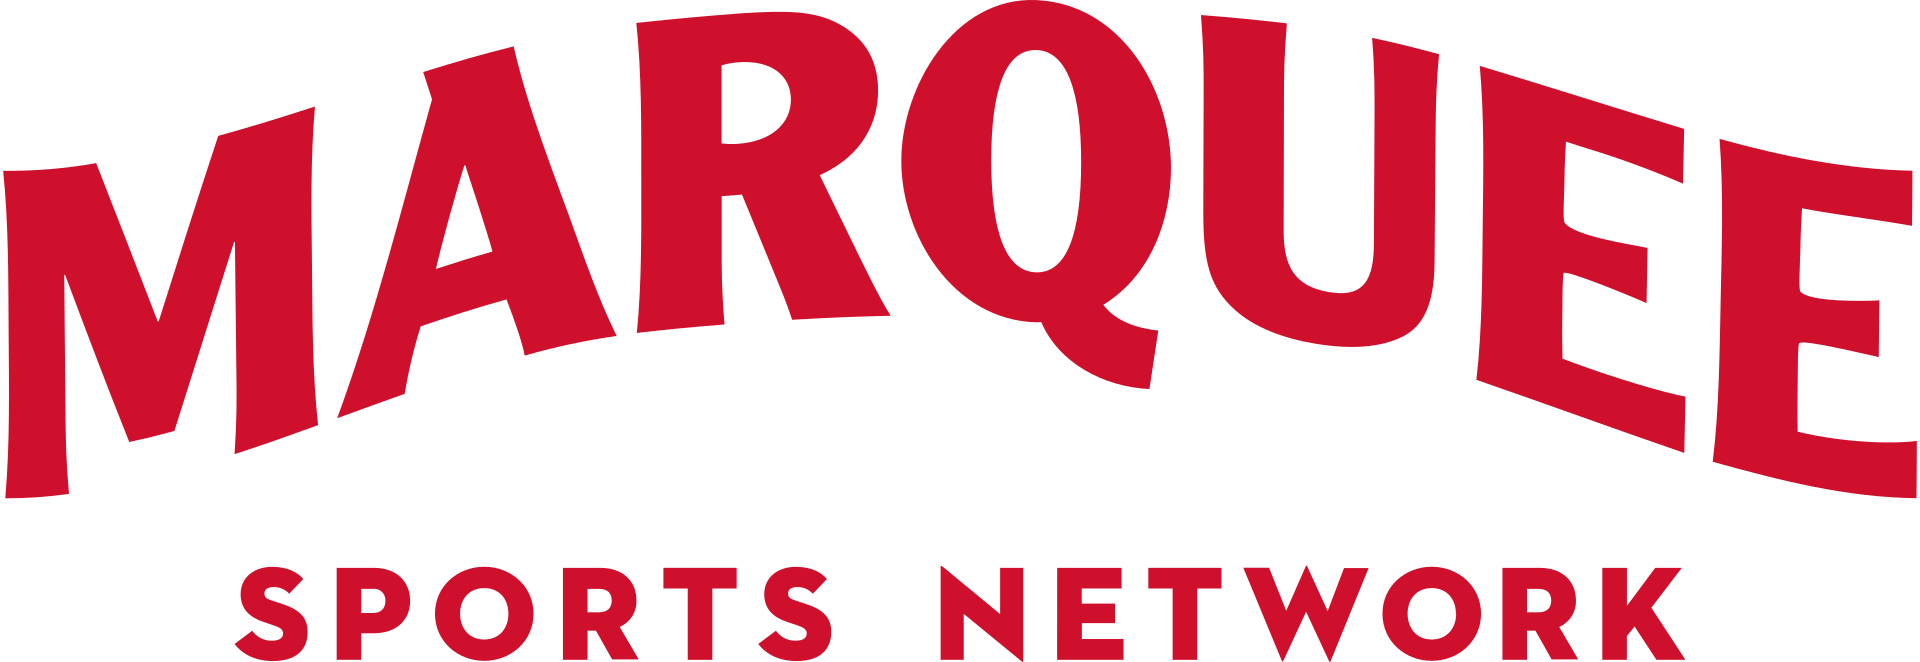 Marquee Sports Network Logopedia Fandom